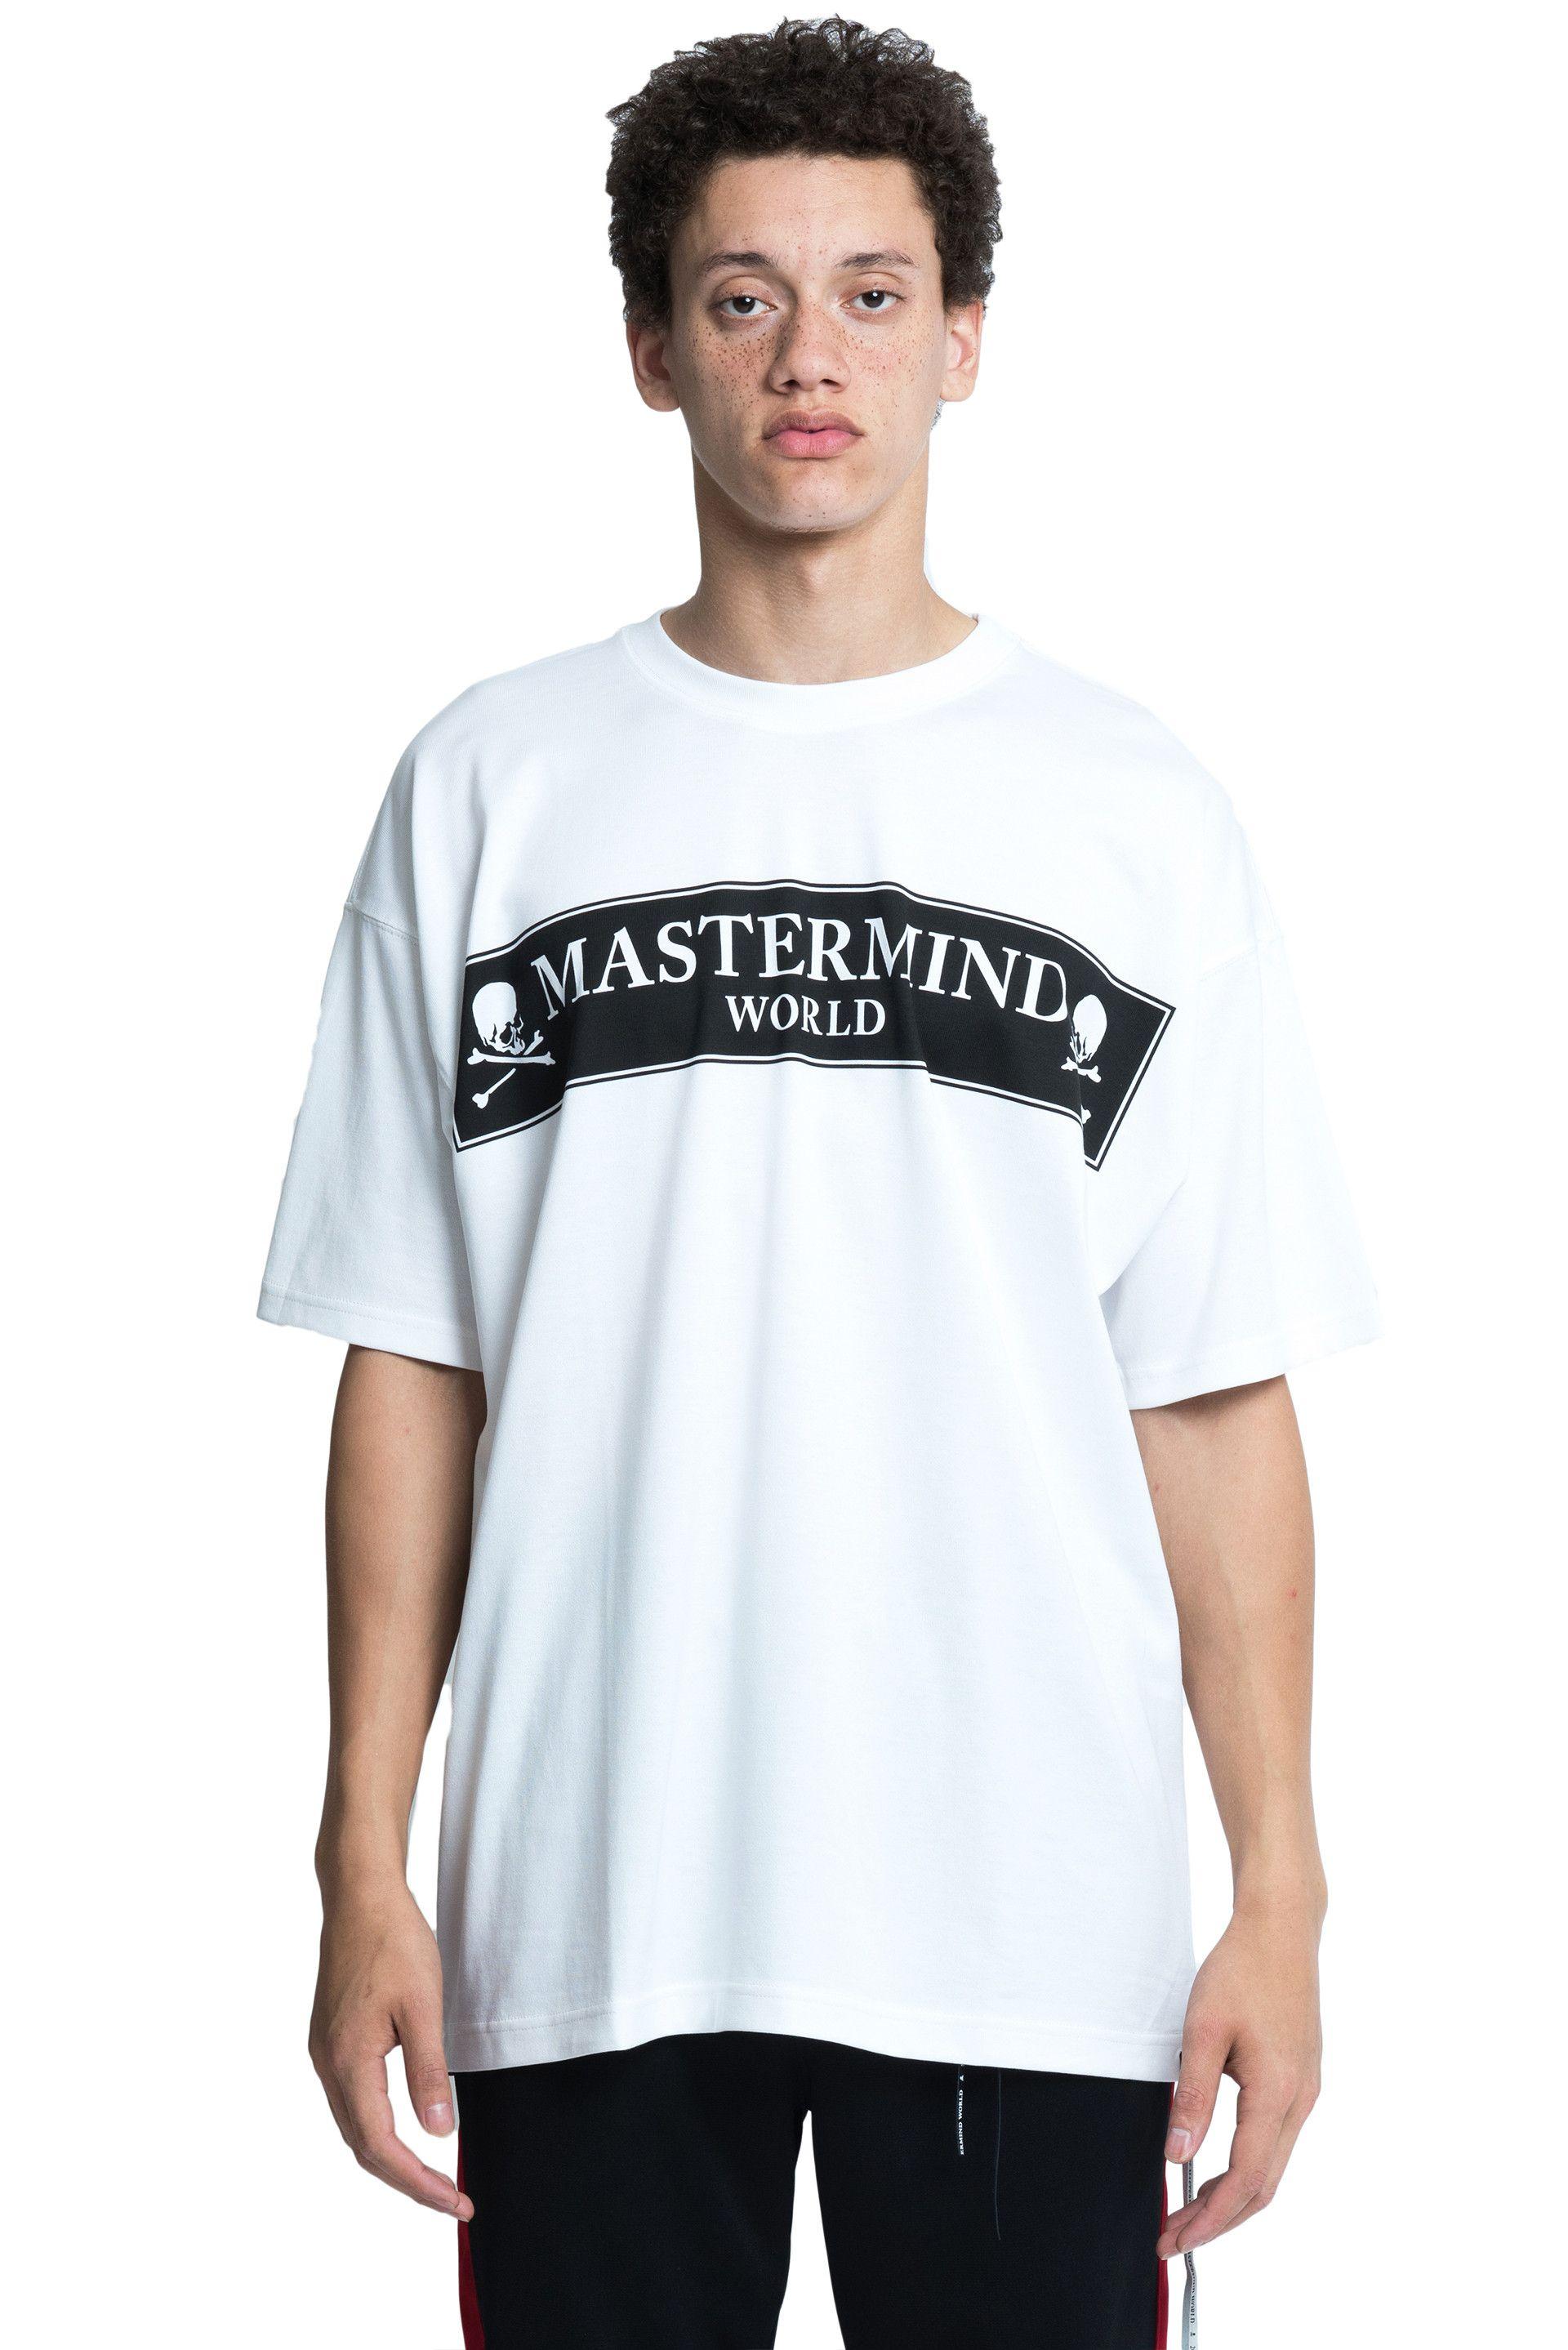 White Box Logo - Mastermind World White Box Logo T Shirt, AW18